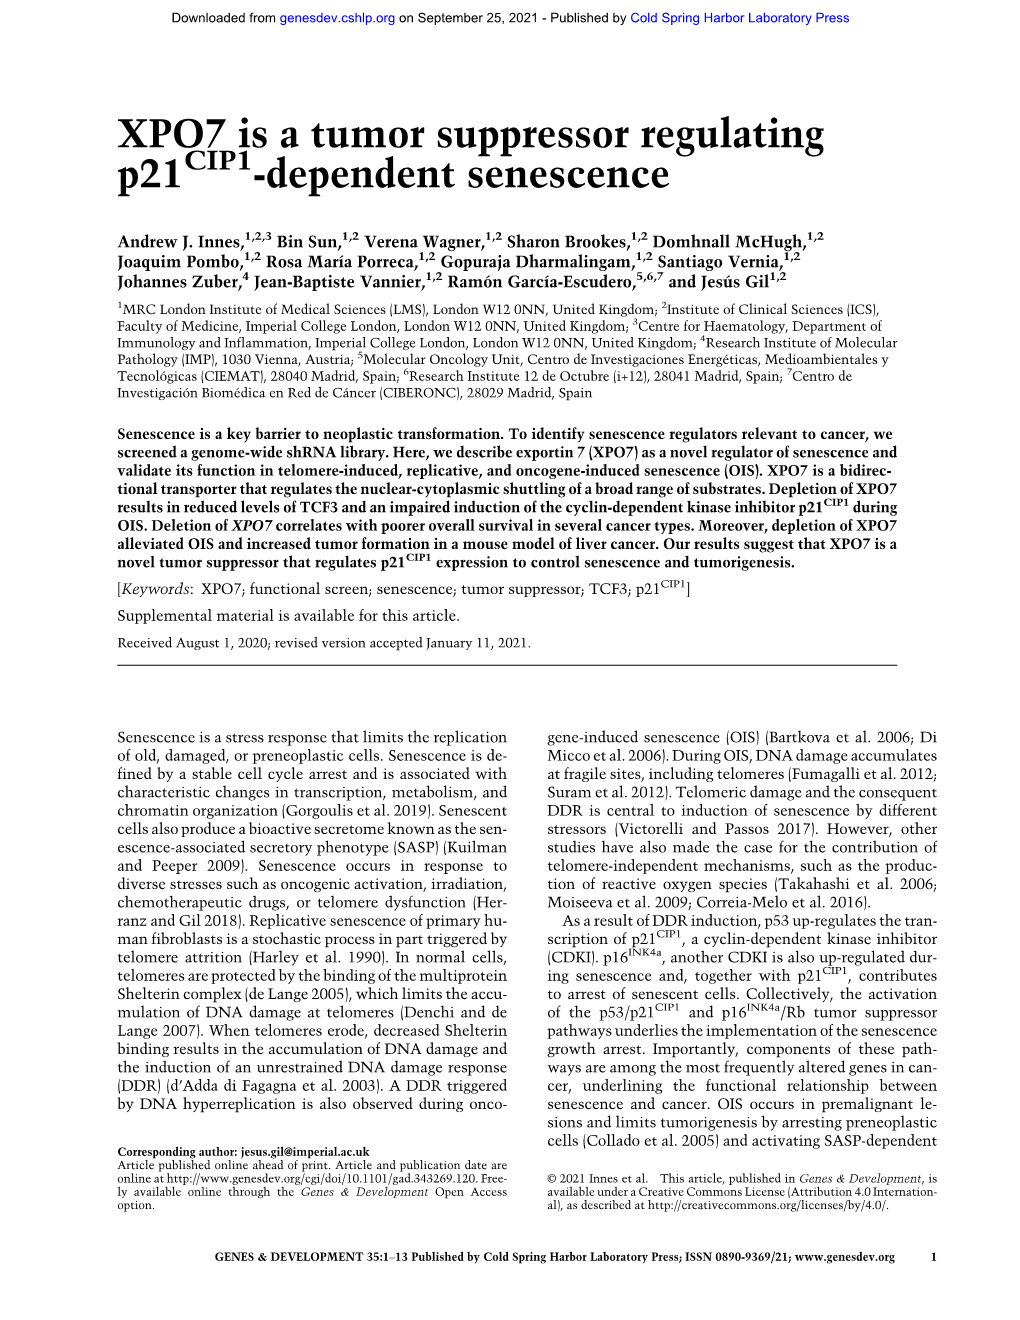 XPO7 Is a Tumor Suppressor Regulating P21cip1-Dependent Senescence